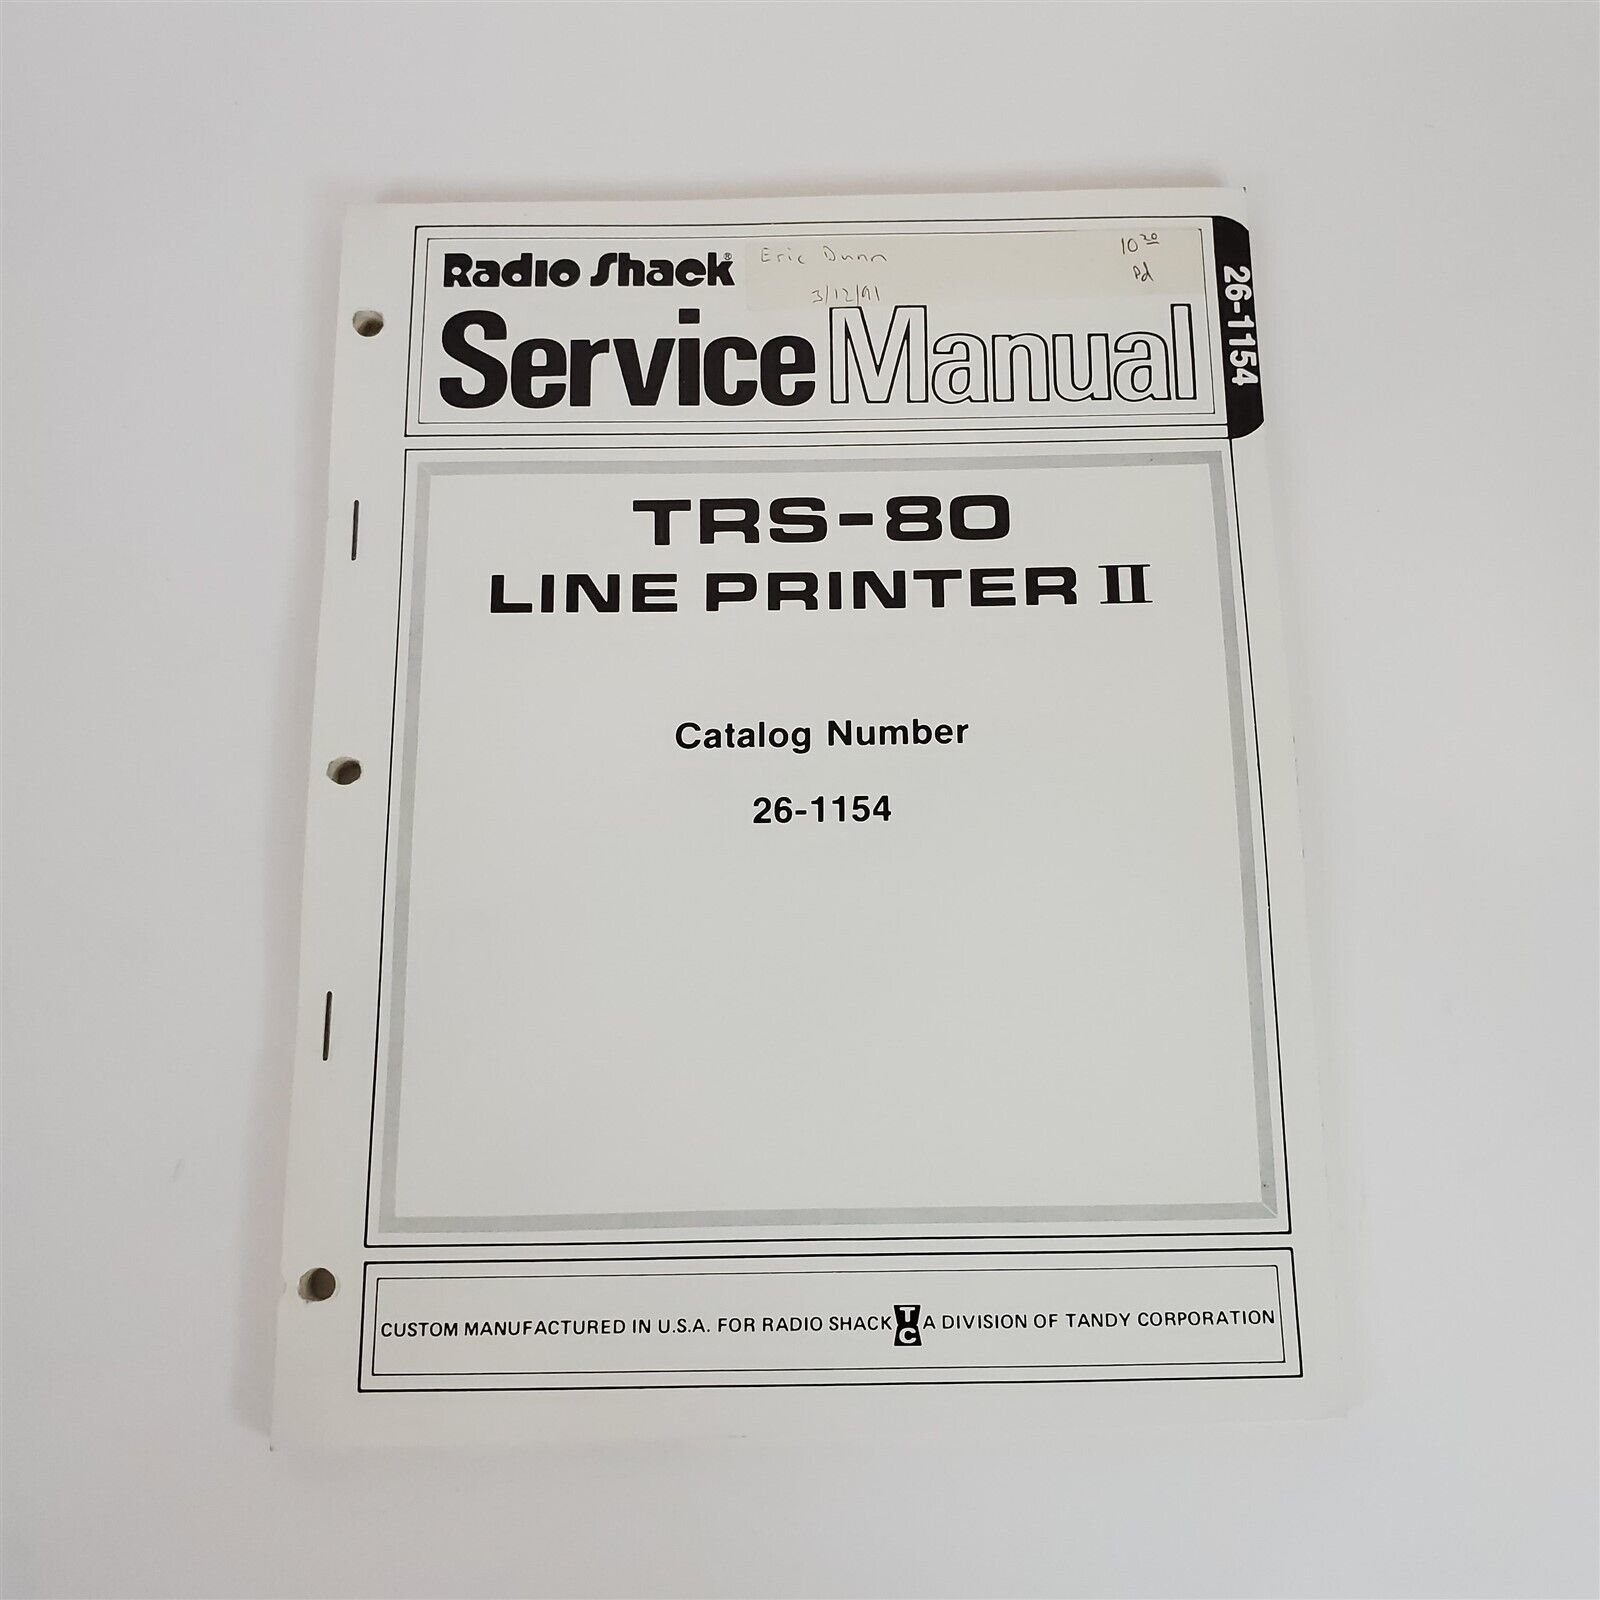 Vintage Original Radio Shack TRS-80 Line Printer II Service Manual 26-1154